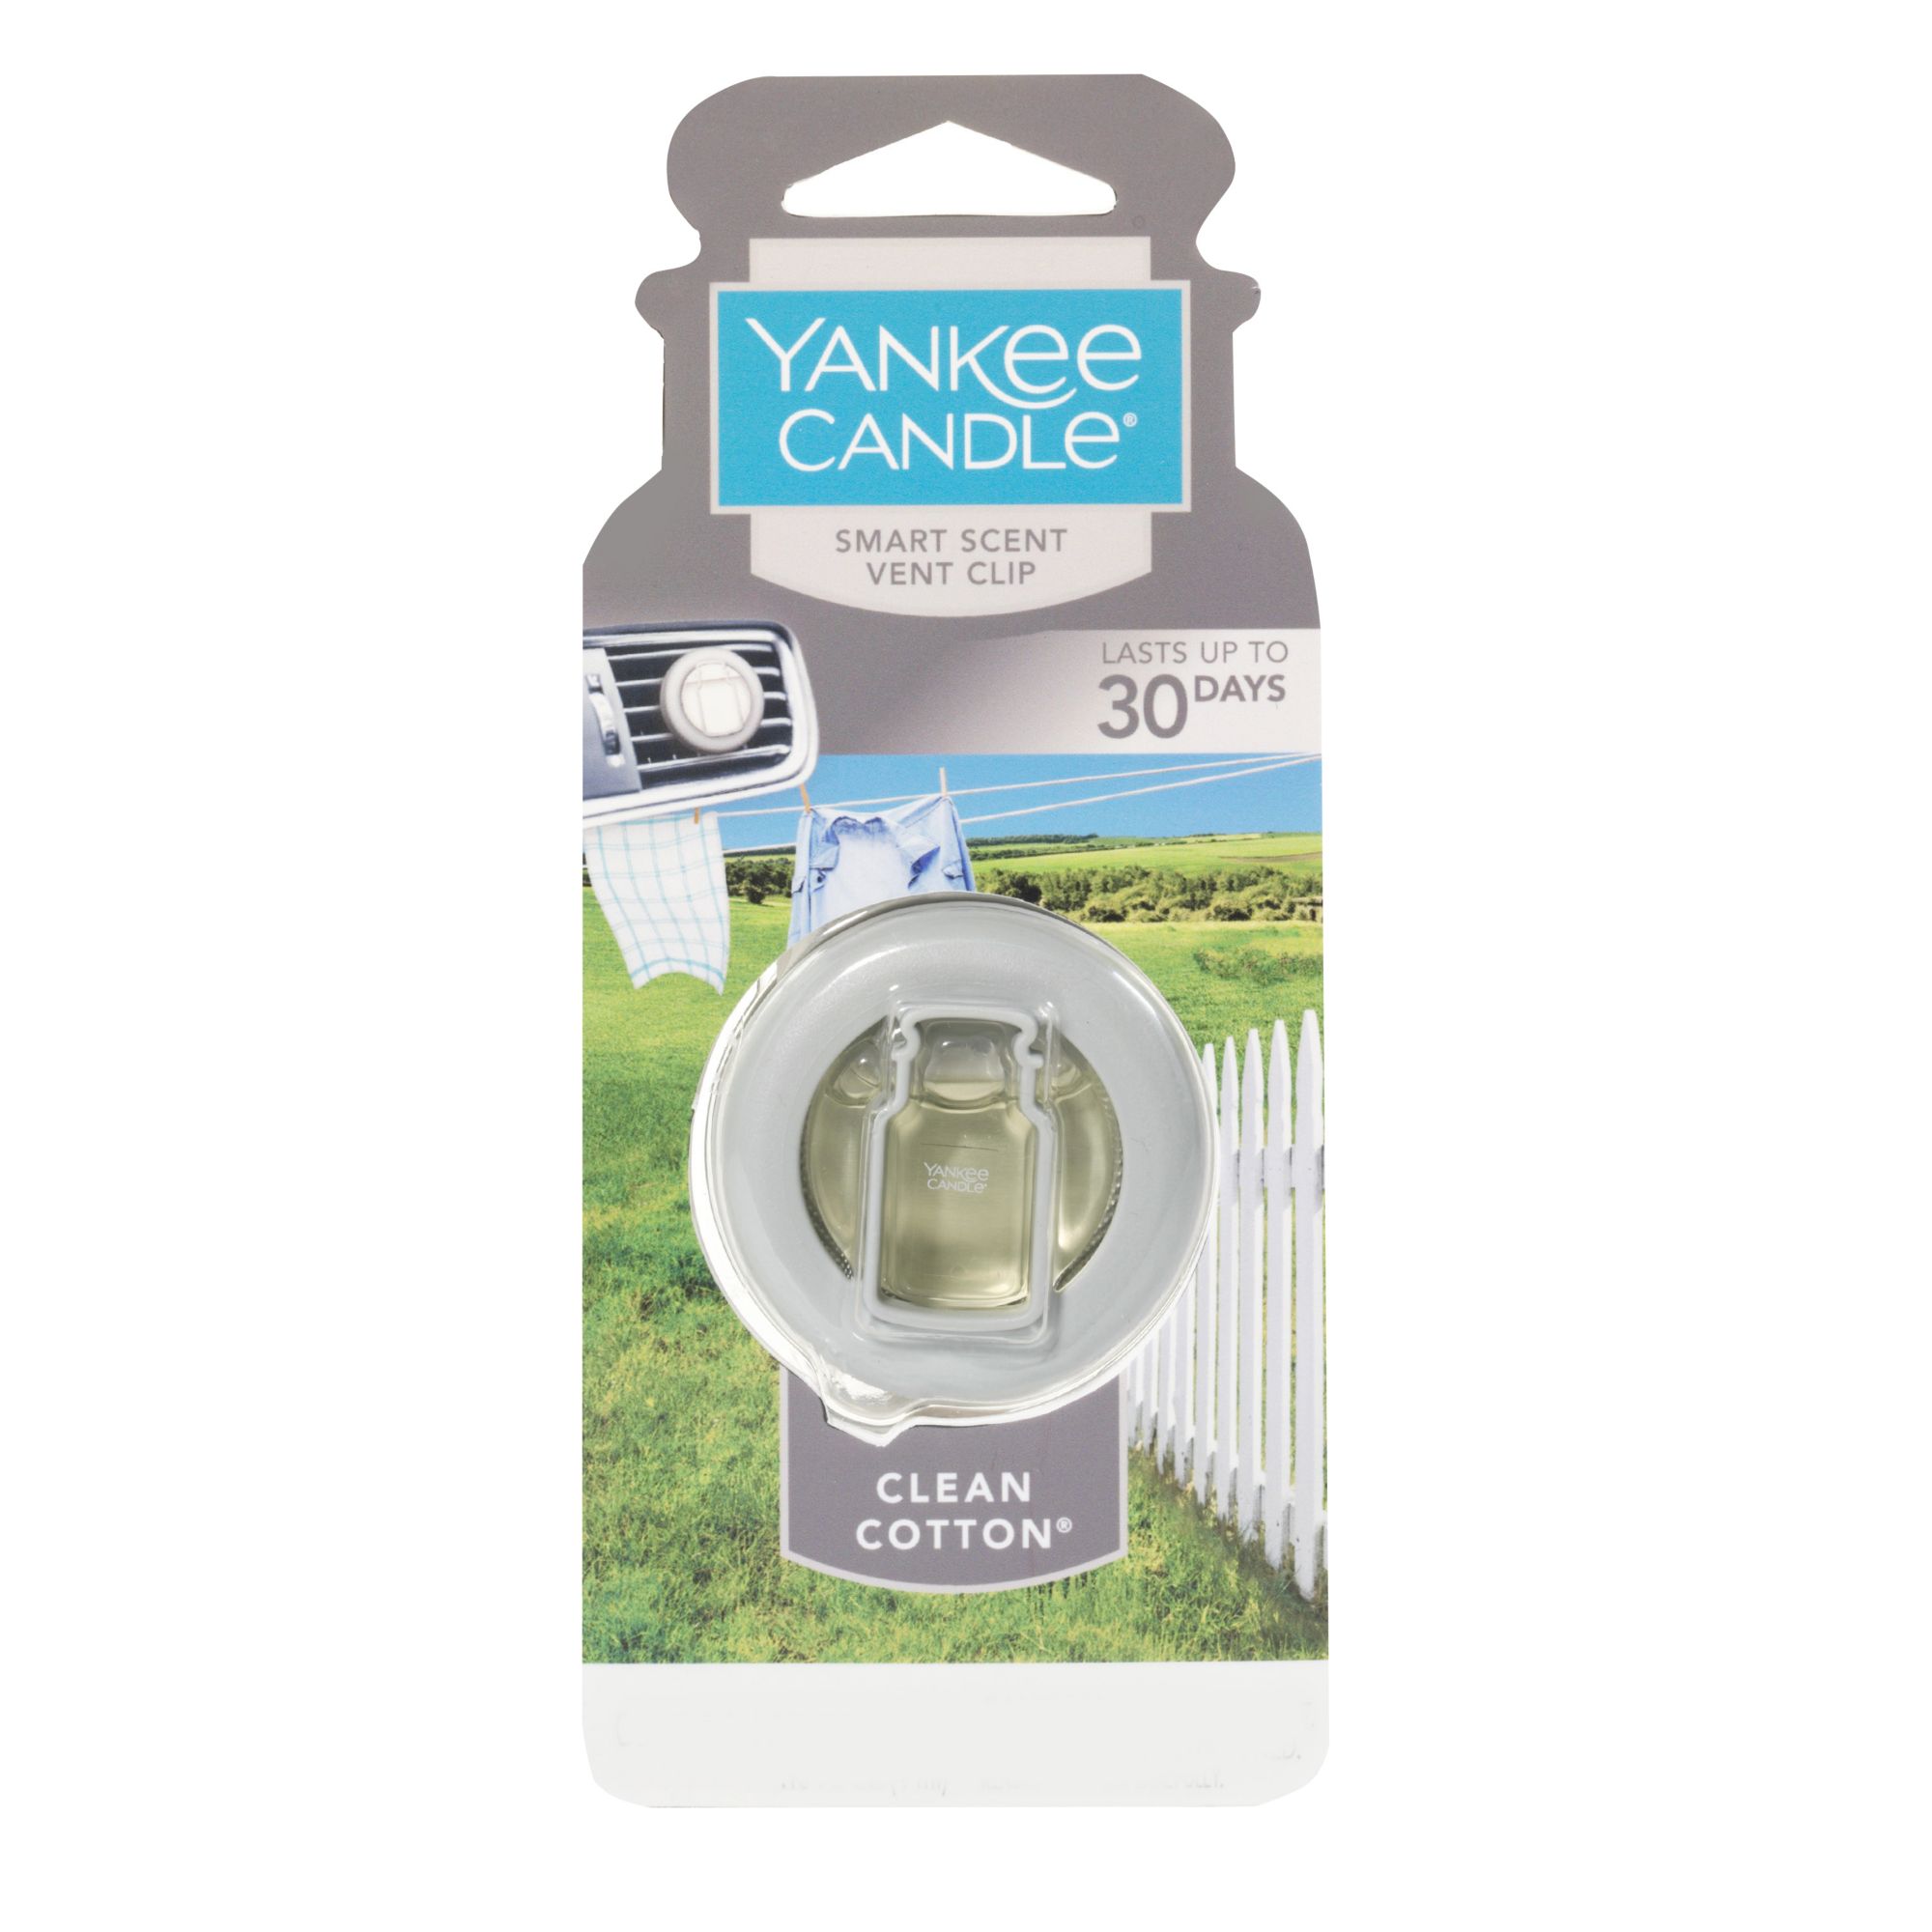 Yankee Candle Smart Scent Vent Clip - Clean Cotton